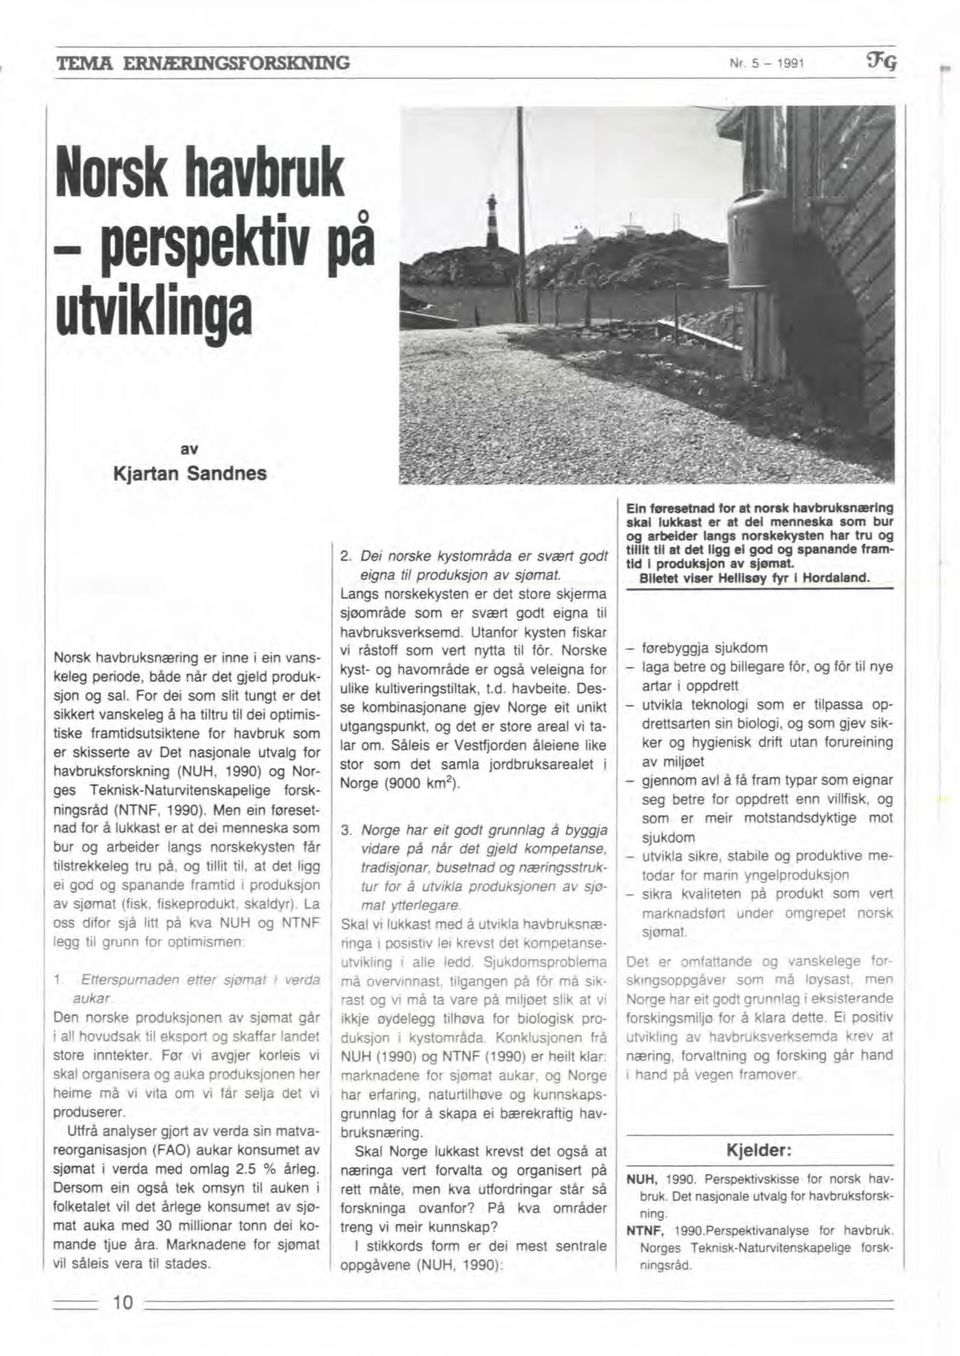 TekniskNatuwbmkapeiii forskningsdd (NTNF, 1990).